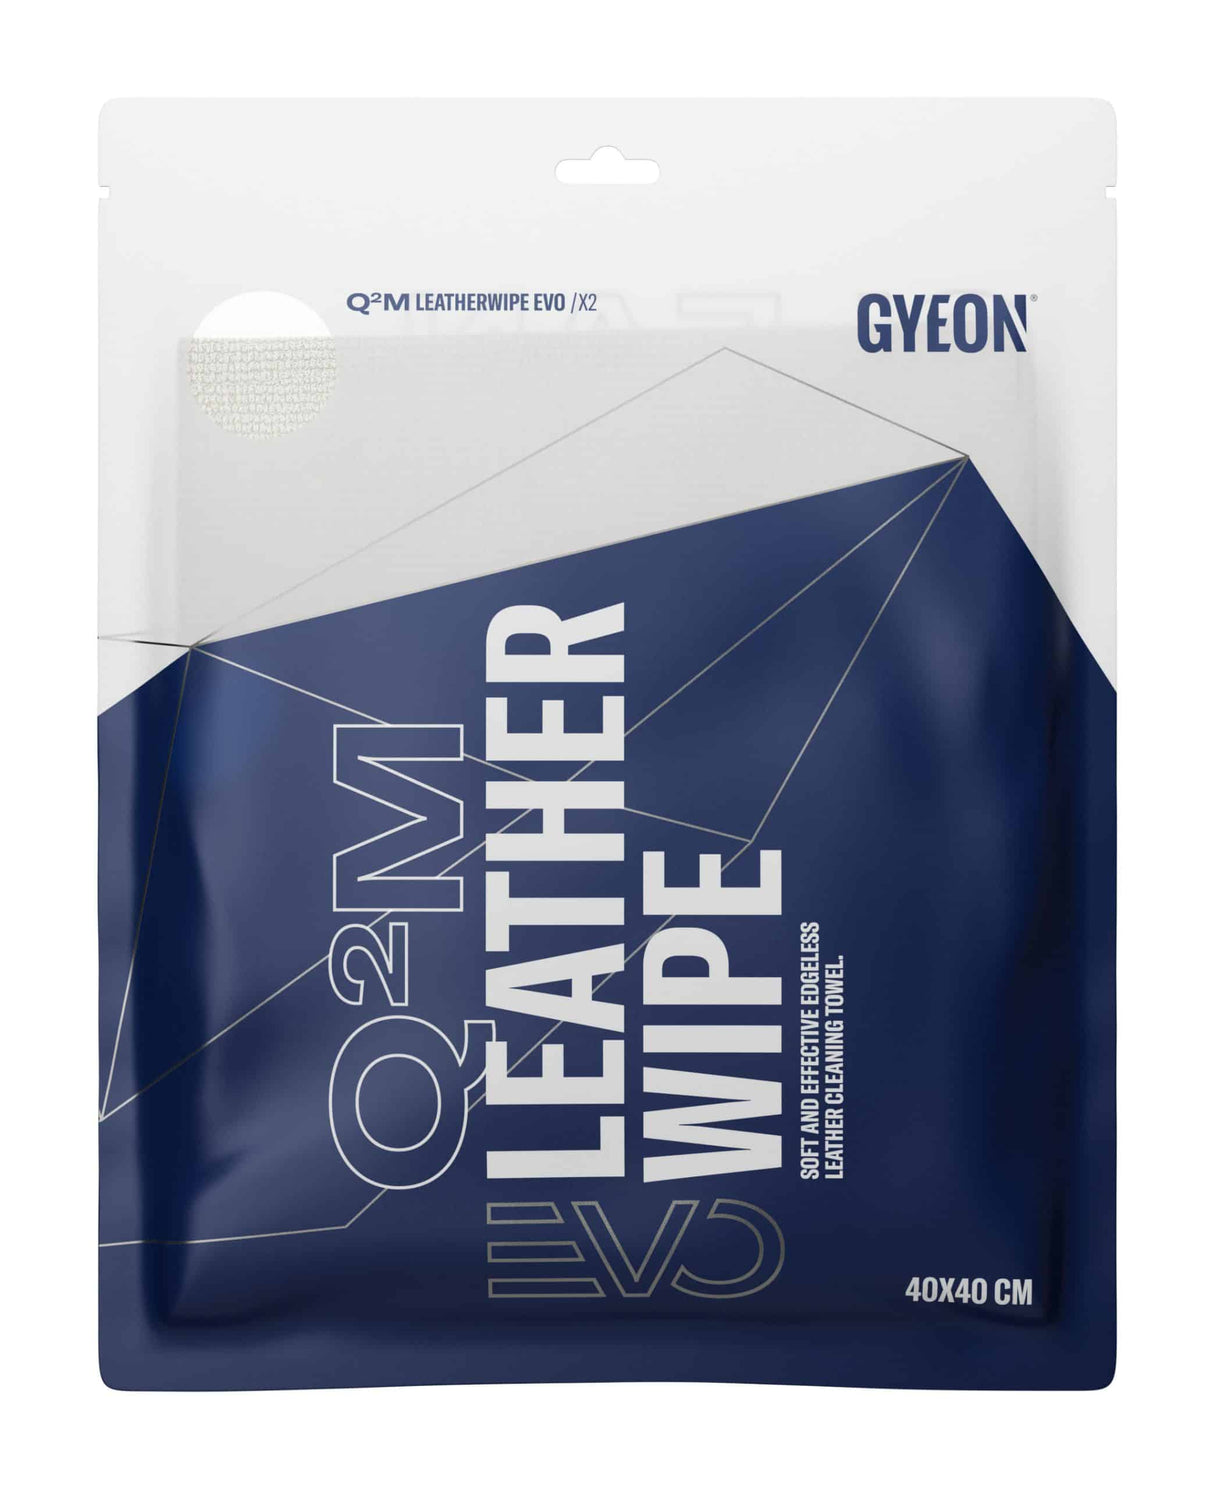 Gyeon Q2M Accessories LeatherWipe EVO Microfibre Cloths